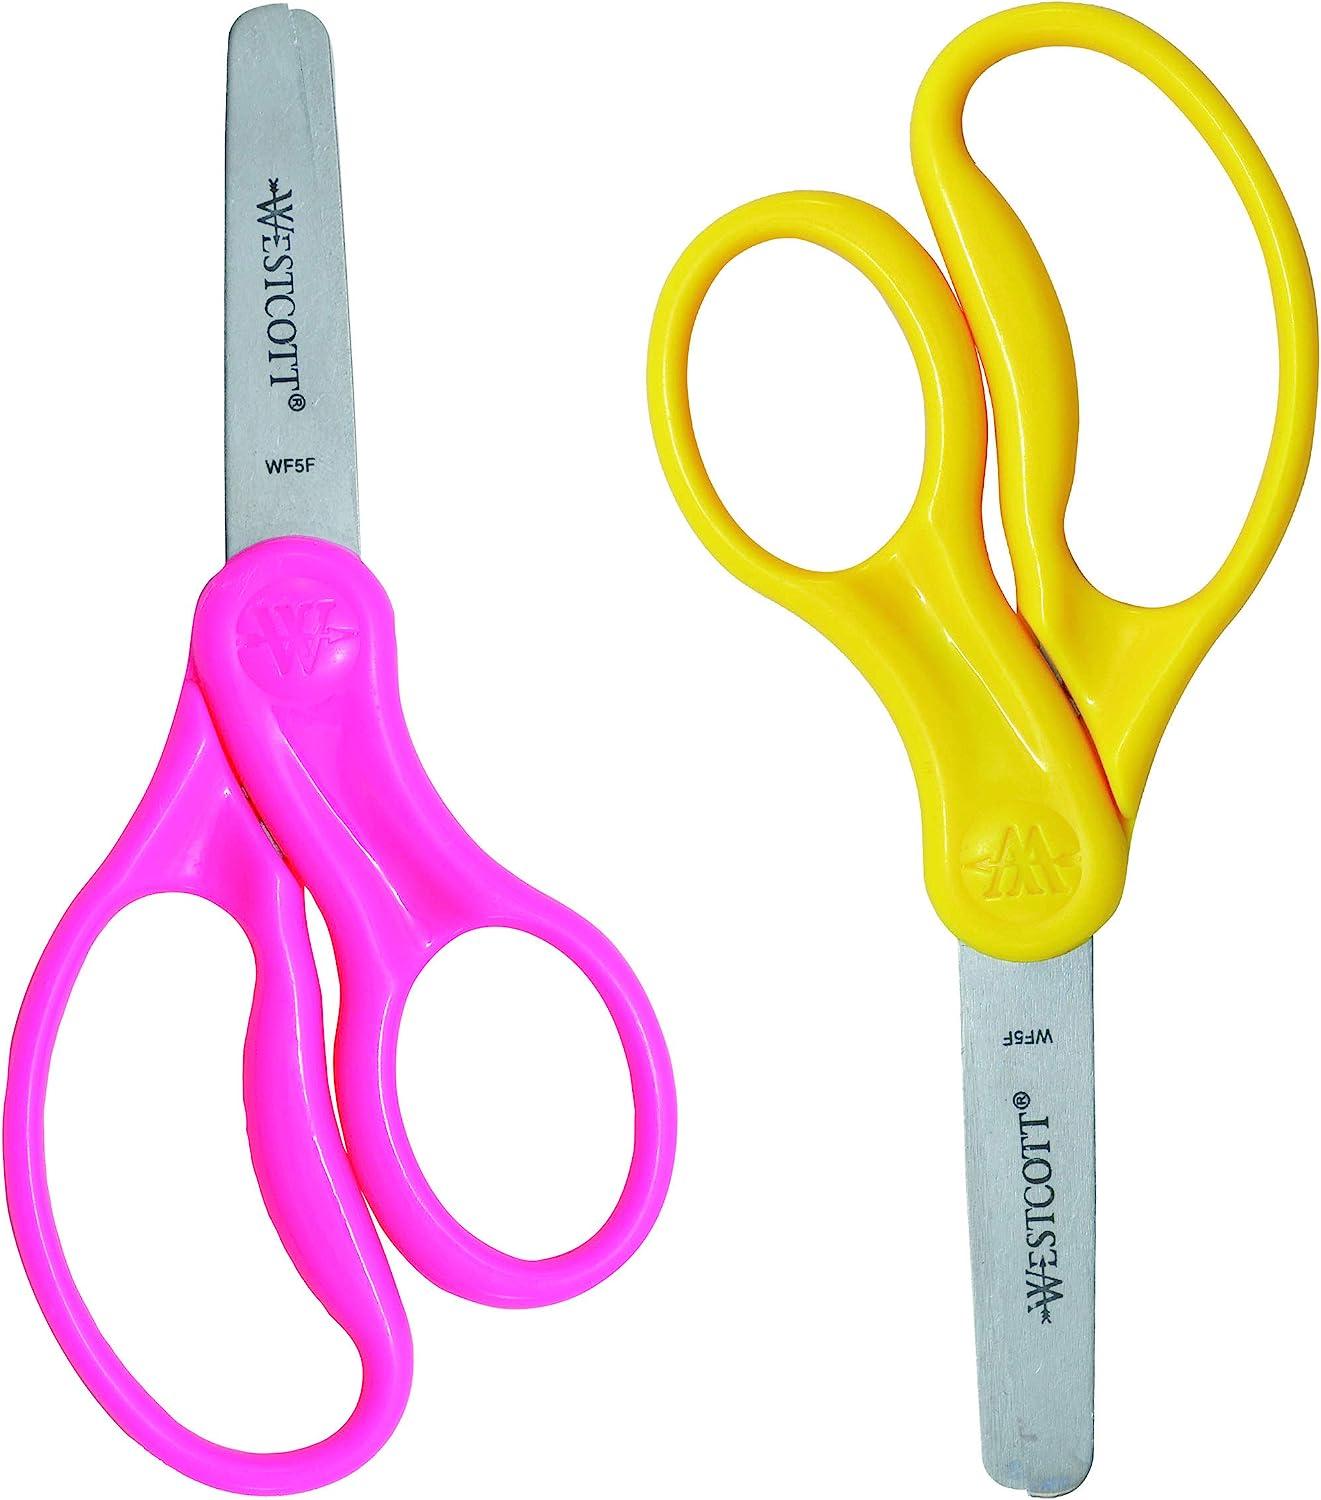 Bee children scissors for age 4+ 13 cm